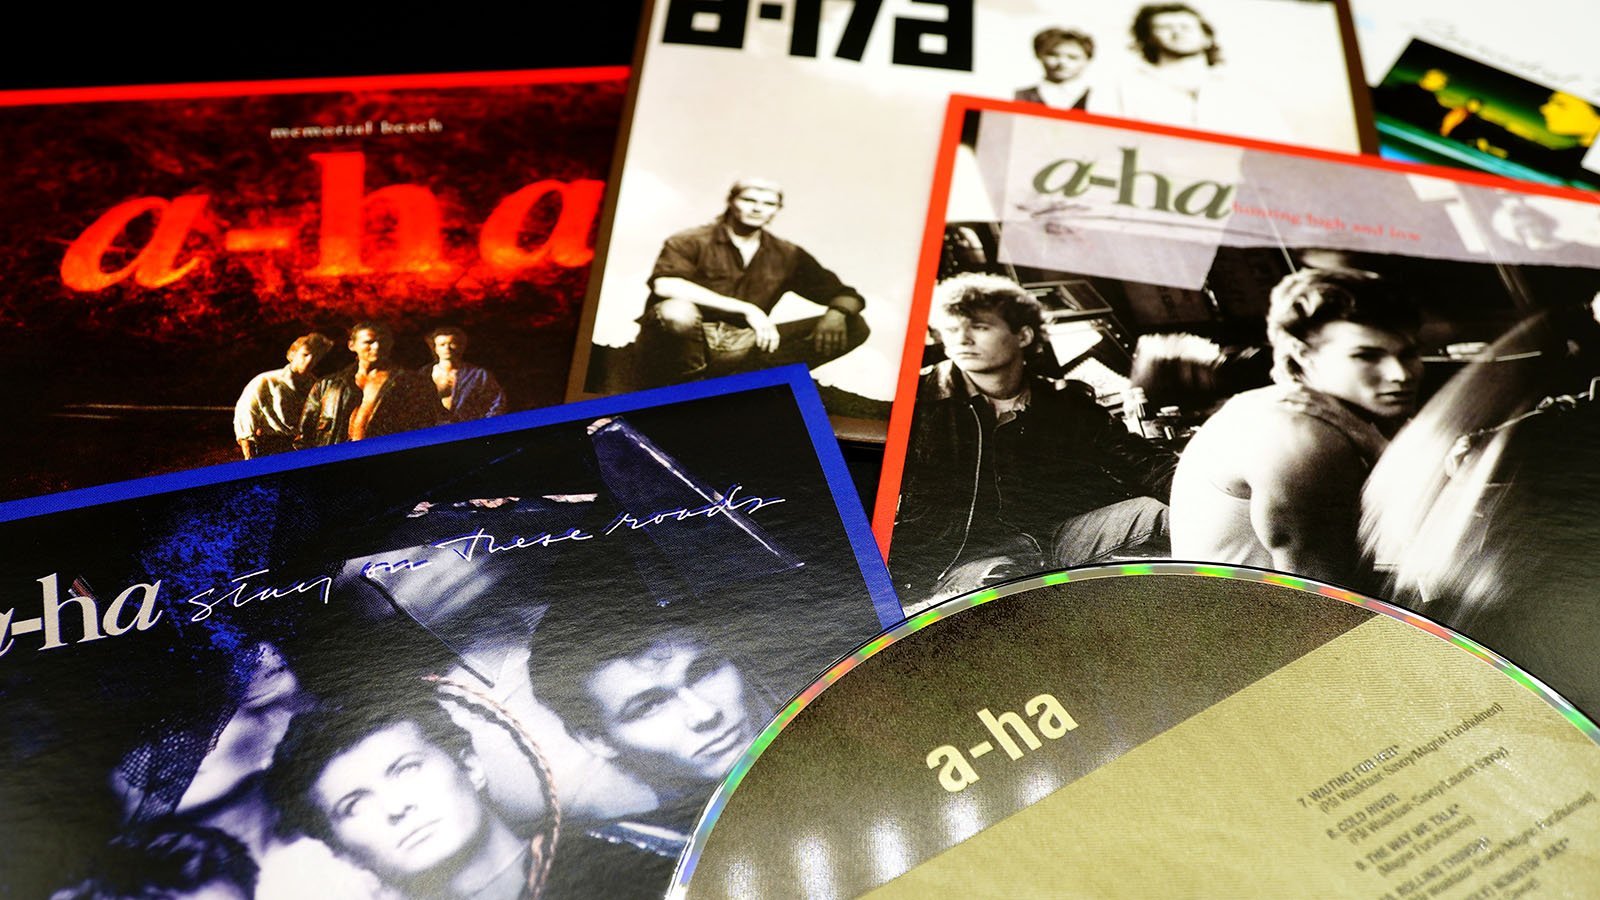 Music releases from Norwegian band A-Ha. Photo: Kraft74 / Shutterstock.com.